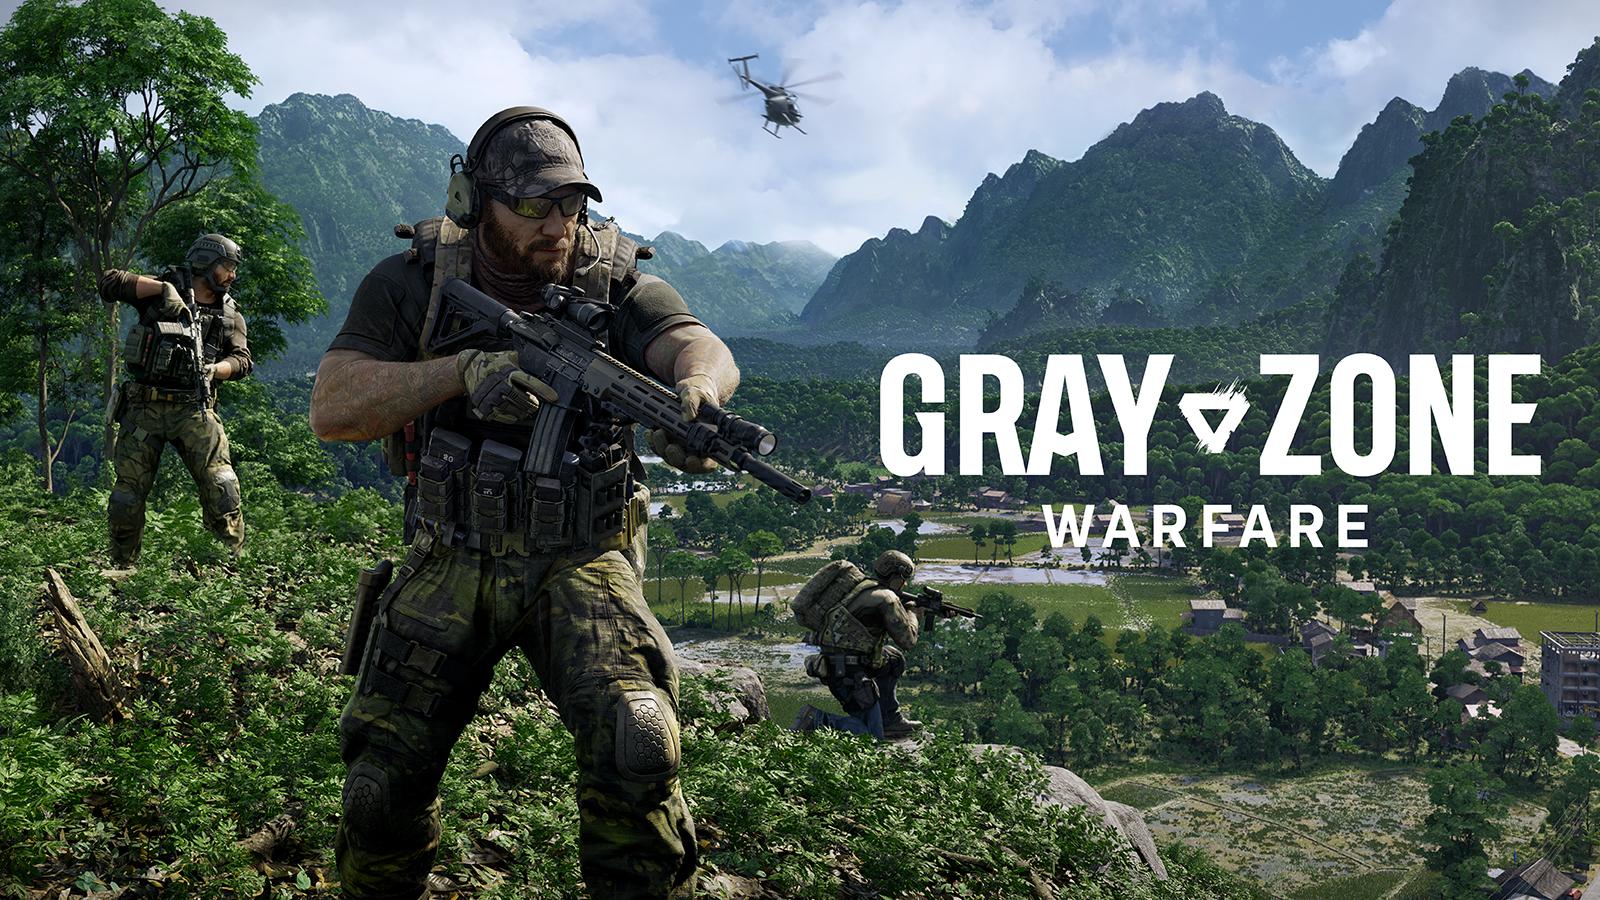 Gray Zone Warfare personnage avec logo